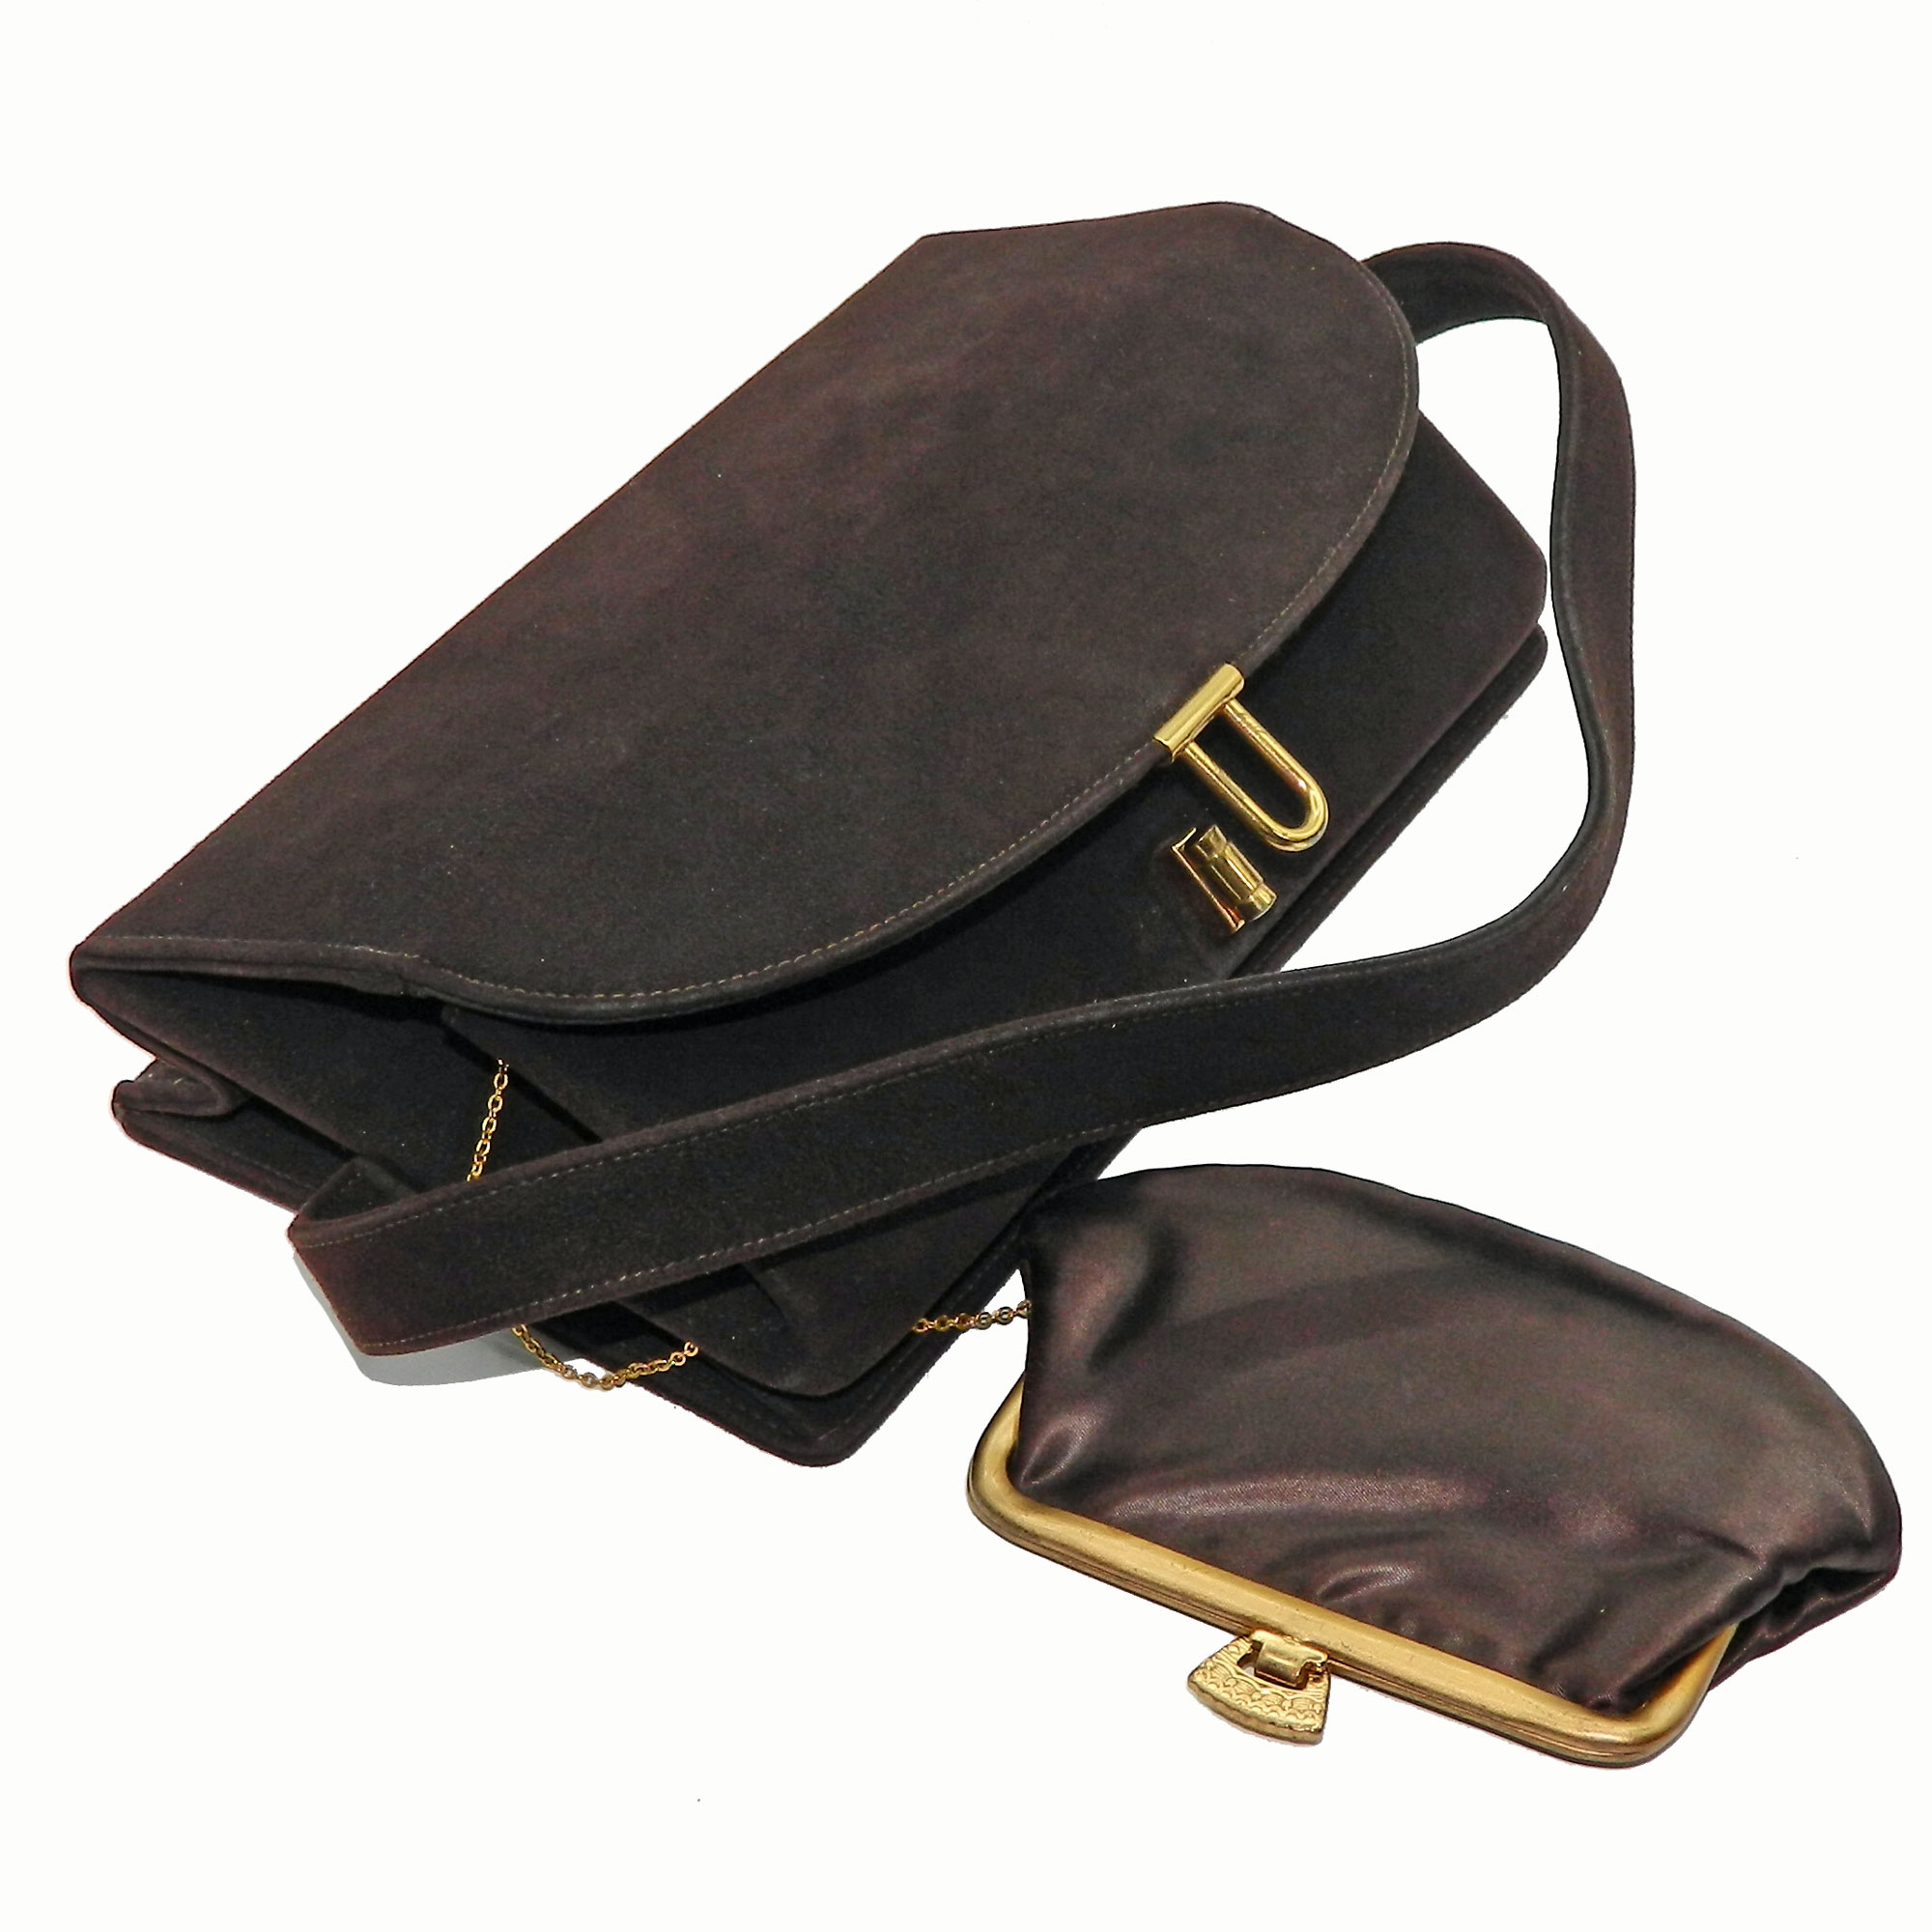 1940s suede purse